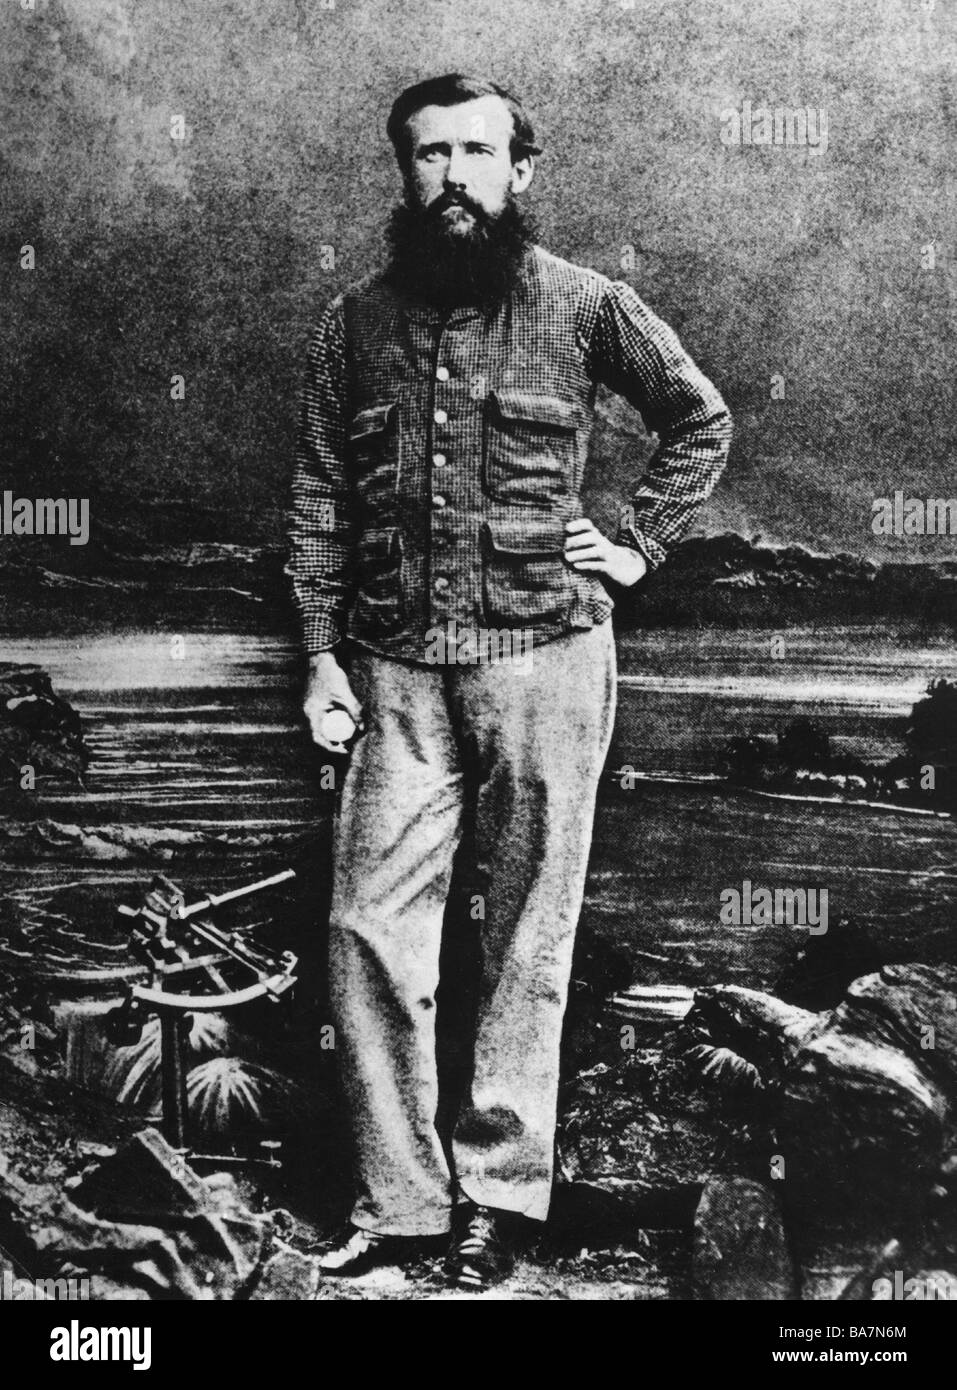 Speke, John Hanning, 4.8.1827 - 15.9.1864, british Africa explorer, lunghezza intera, daguerreotype, 19th secolo, Foto Stock